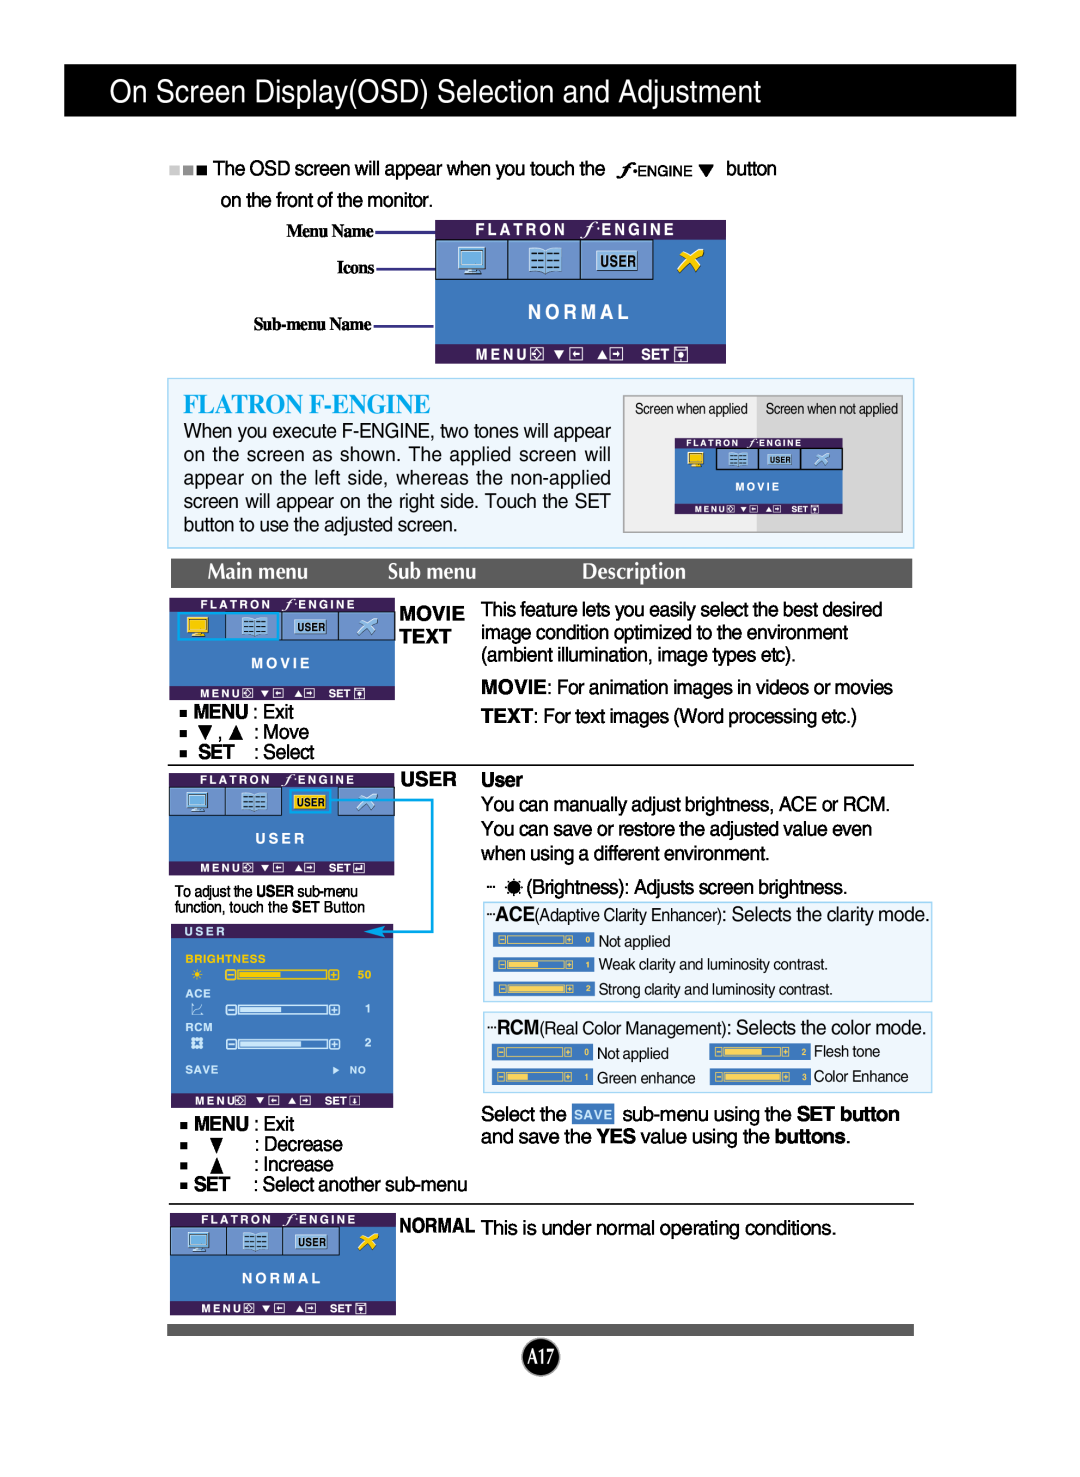 LG Electronics W2600H On Screen DisplayOSD Selection and Adjustment, Flatron F-Engine, Main menu, Description, Movie, Text 